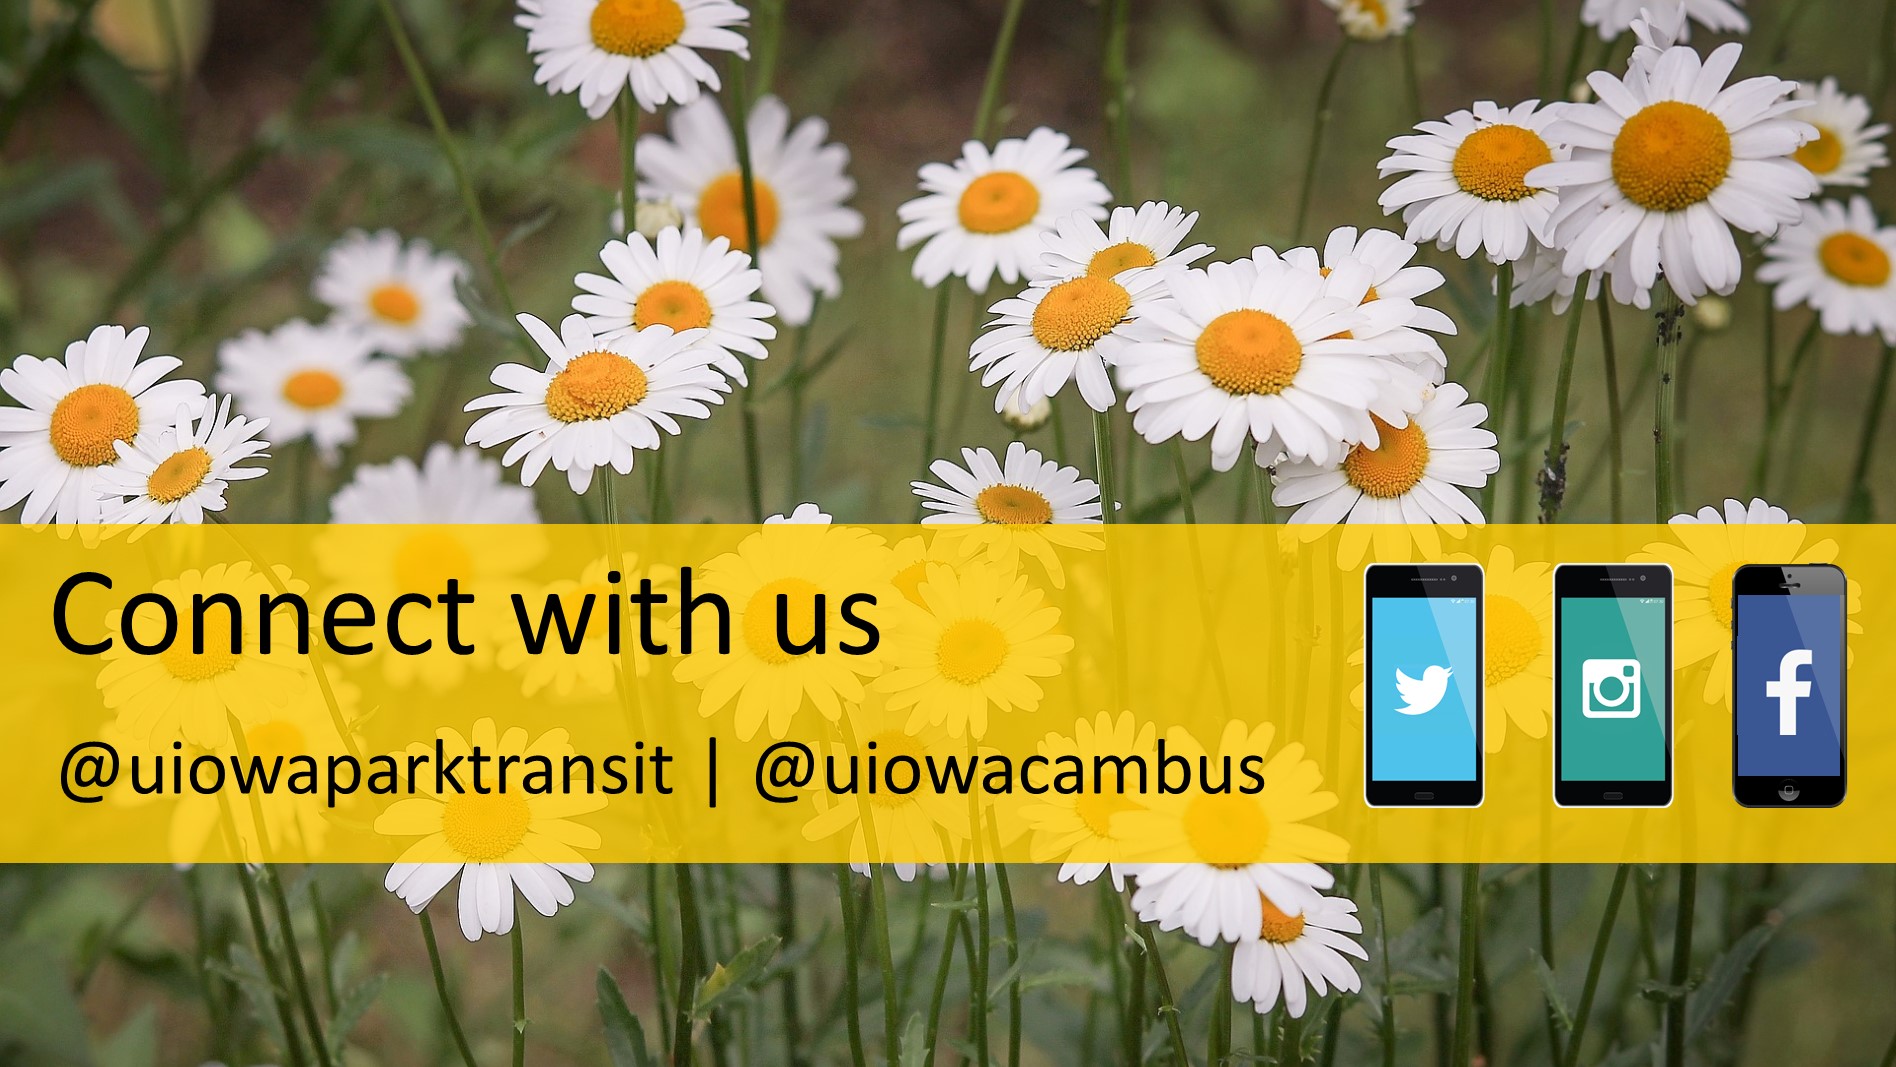 social media channels @uiowaparktransit and @uiowacambus